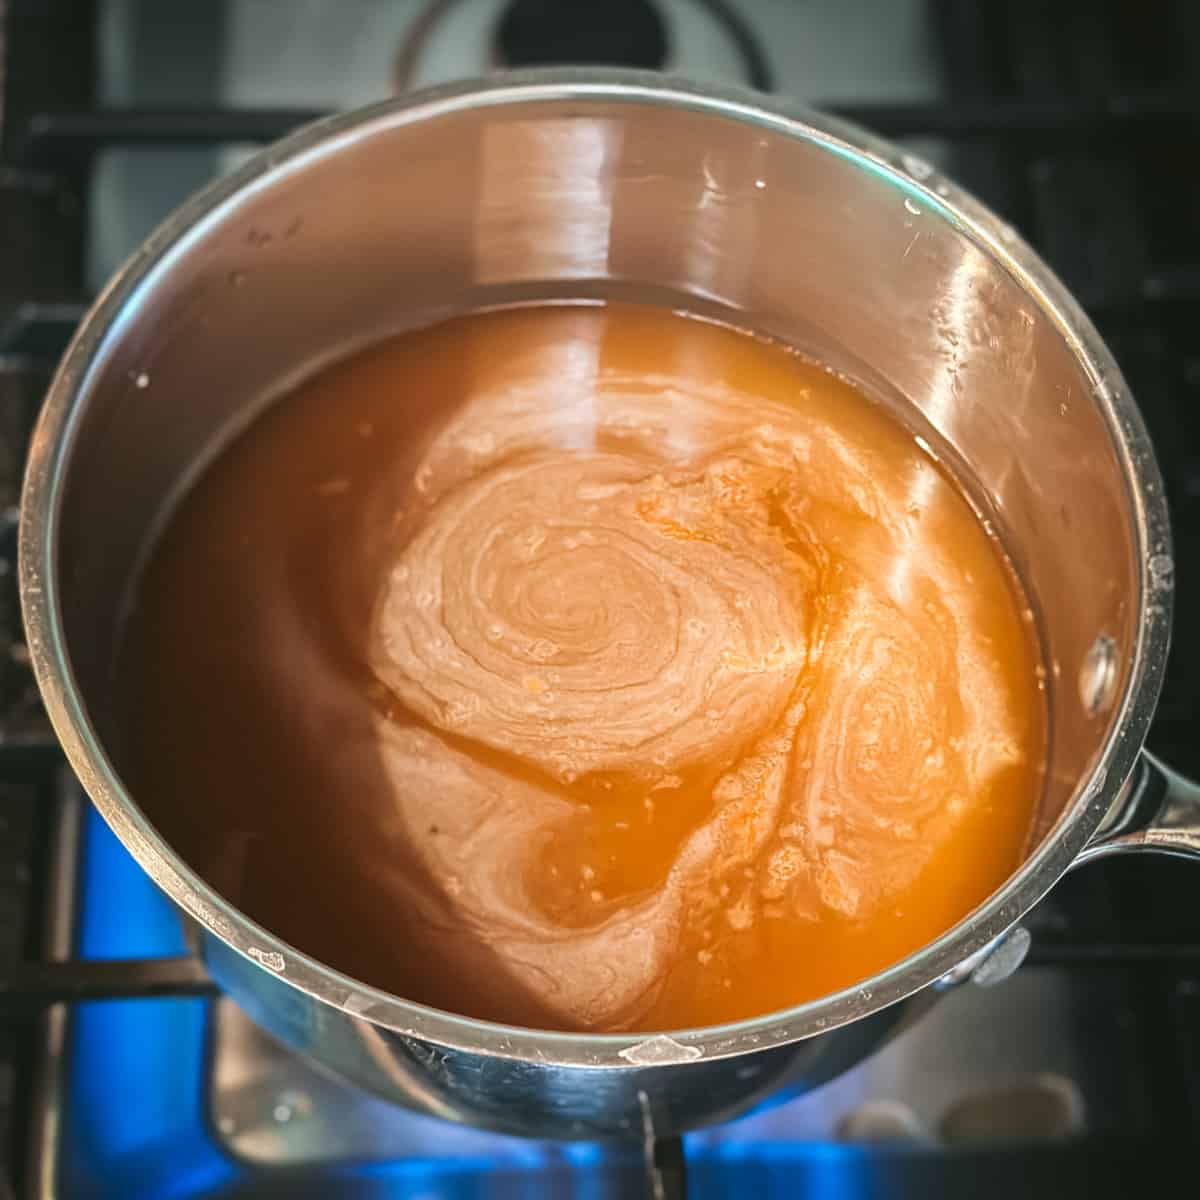 Brine heating up in a saucepan.
